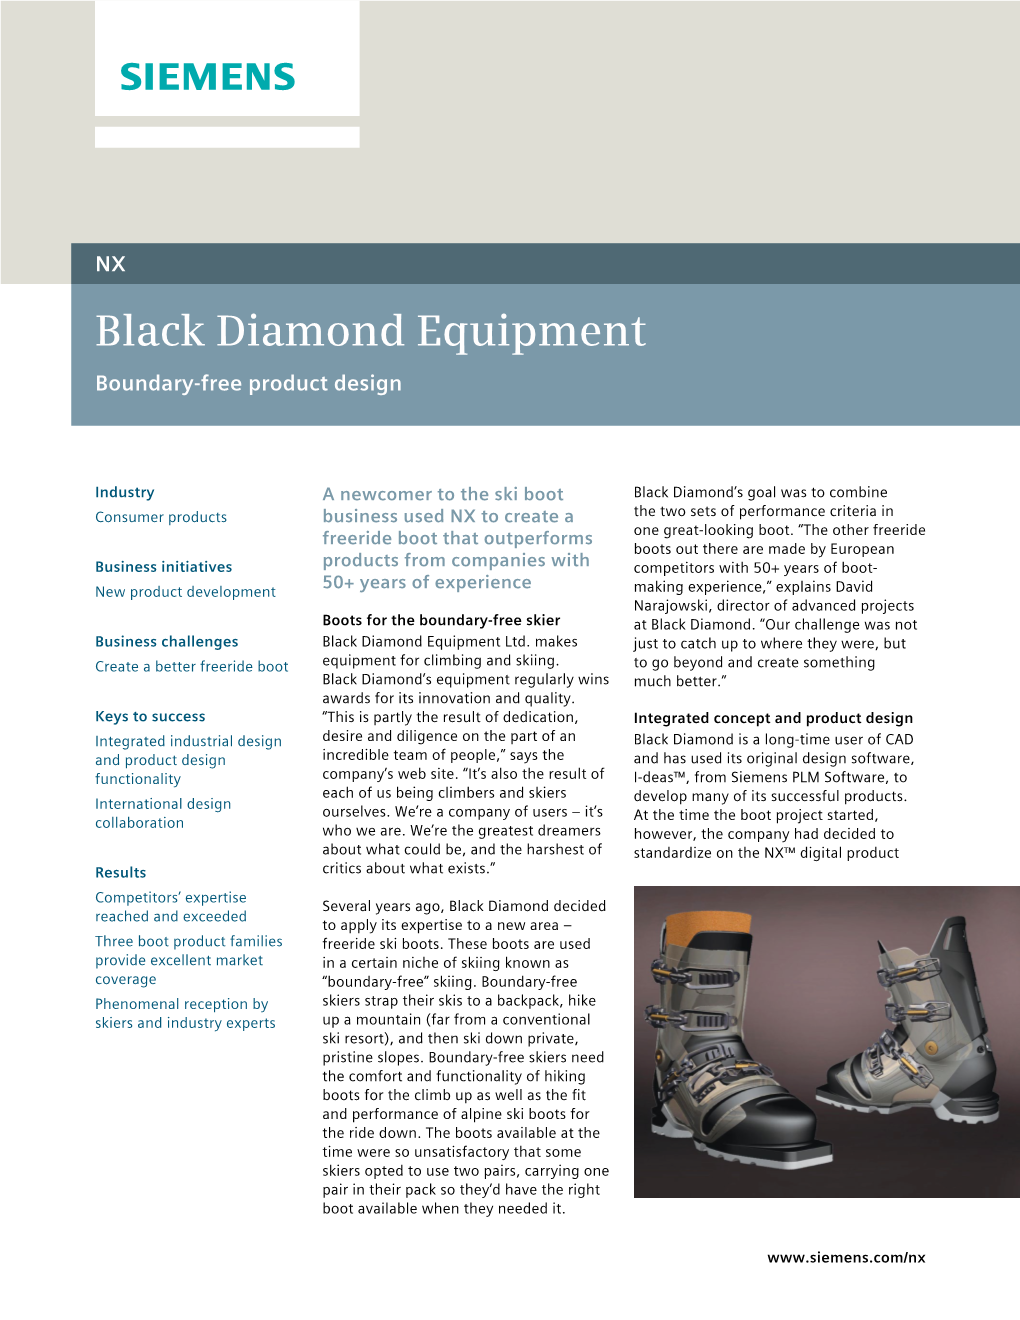 Black Diamond Equipment Case Study